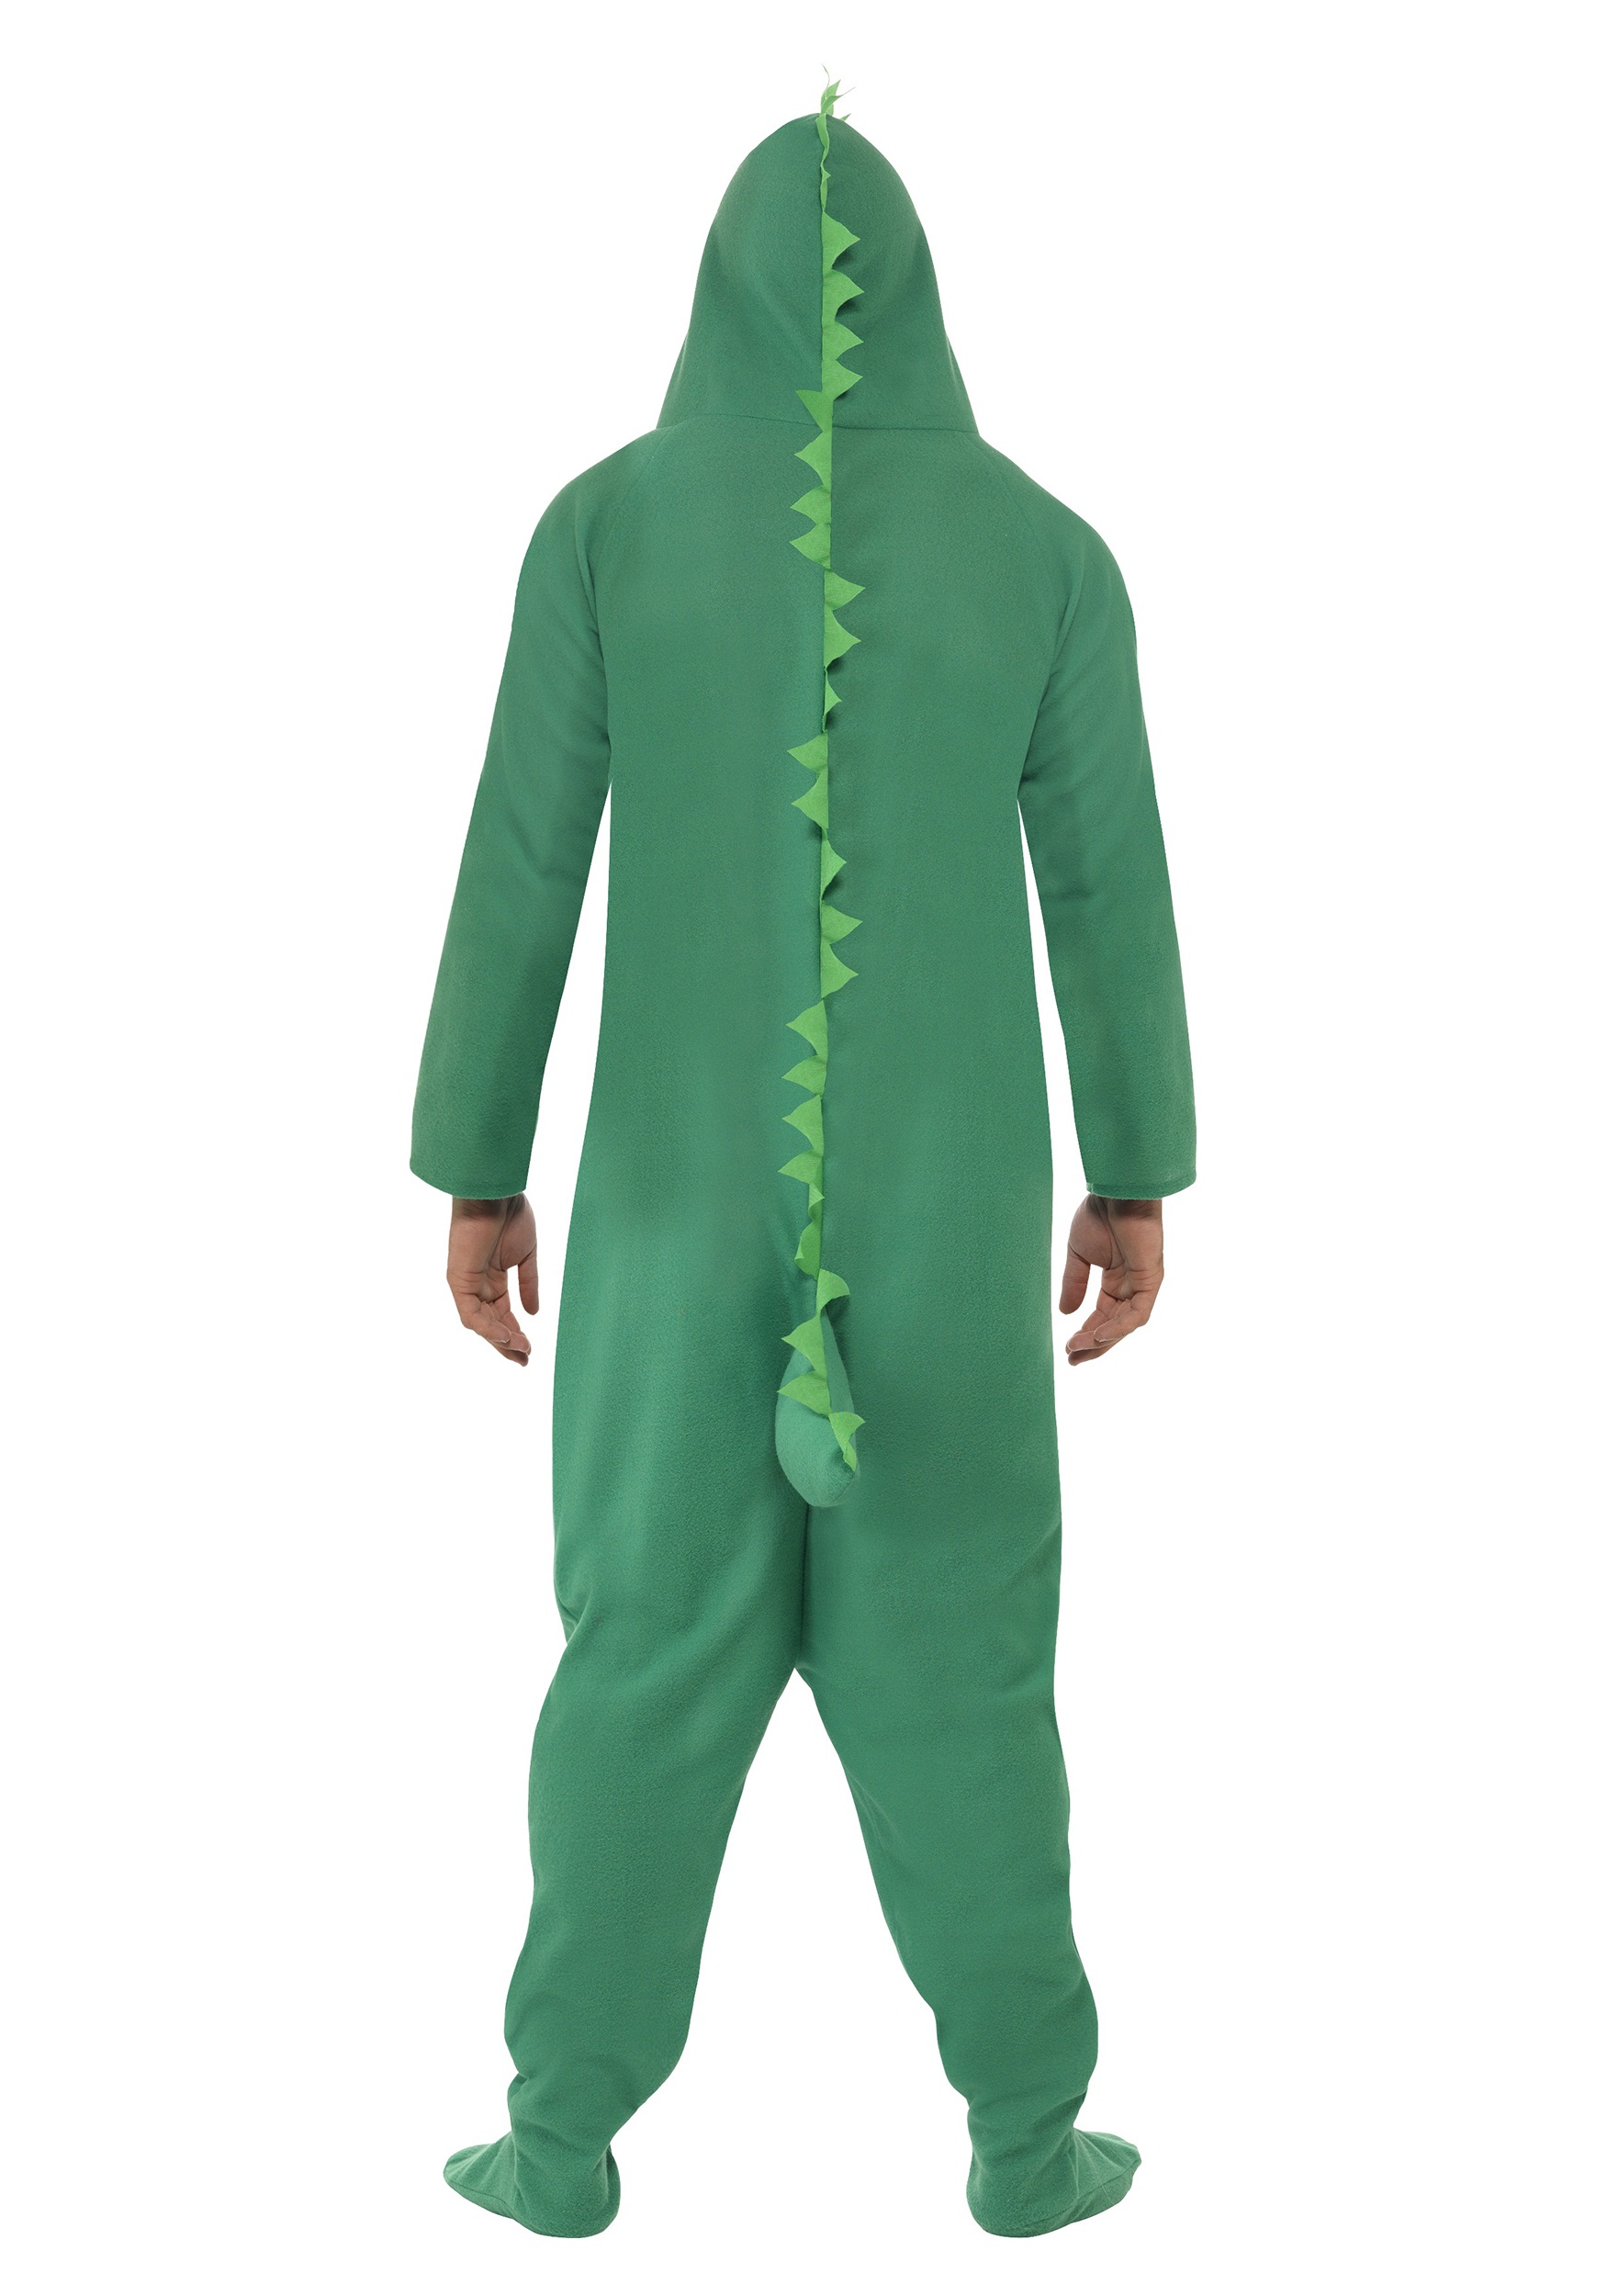 Adult Crocodile Costume